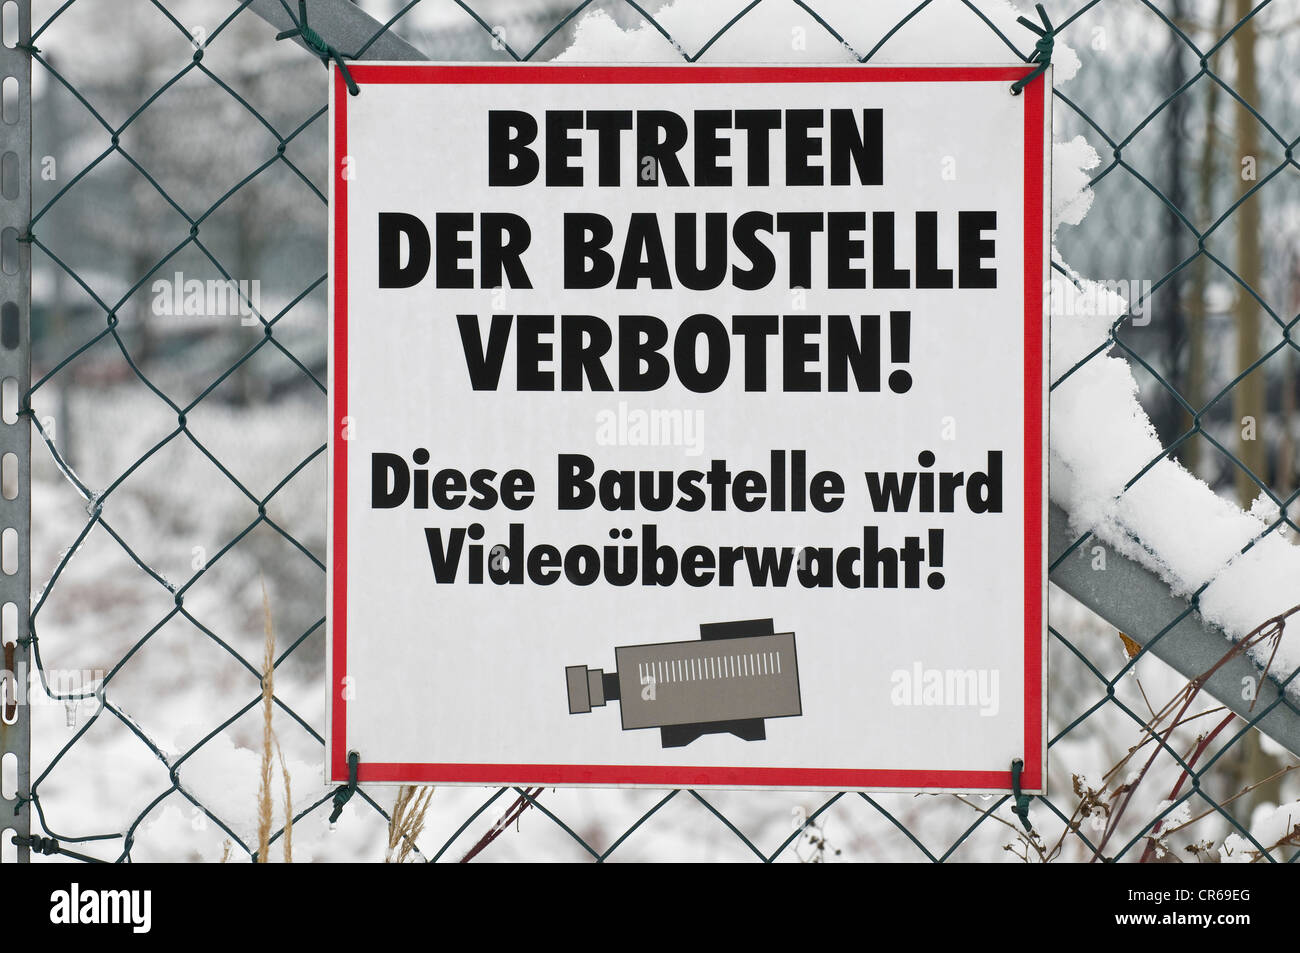 Sign on chain link fence, Betreten der Baustelle verboten Diese Baustelle wird videoueberwacht!, German for Entering the site is Stock Photo